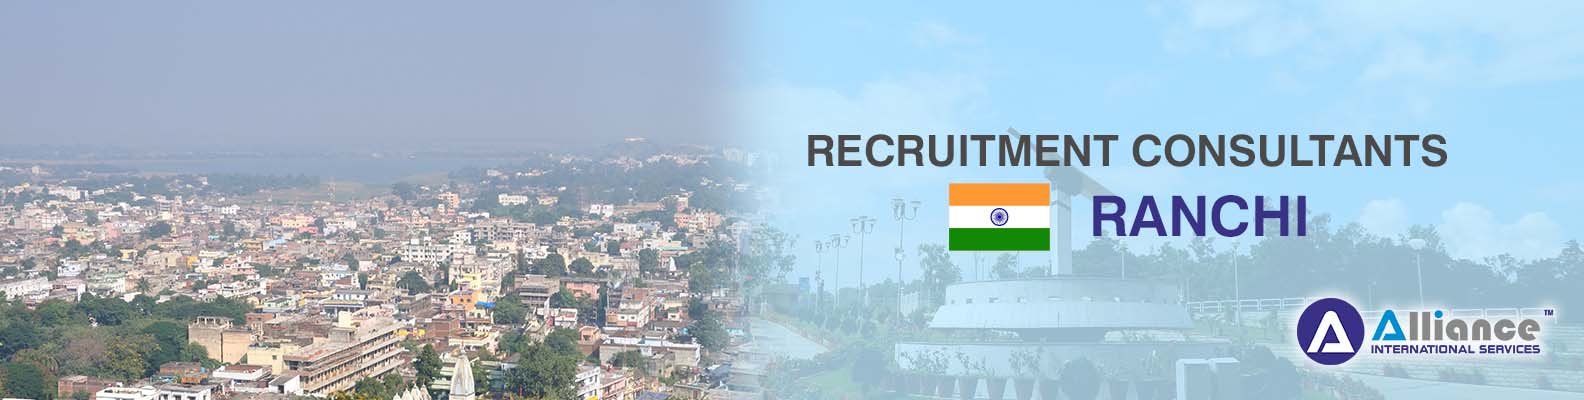 Recruitment Consultants Ranchi